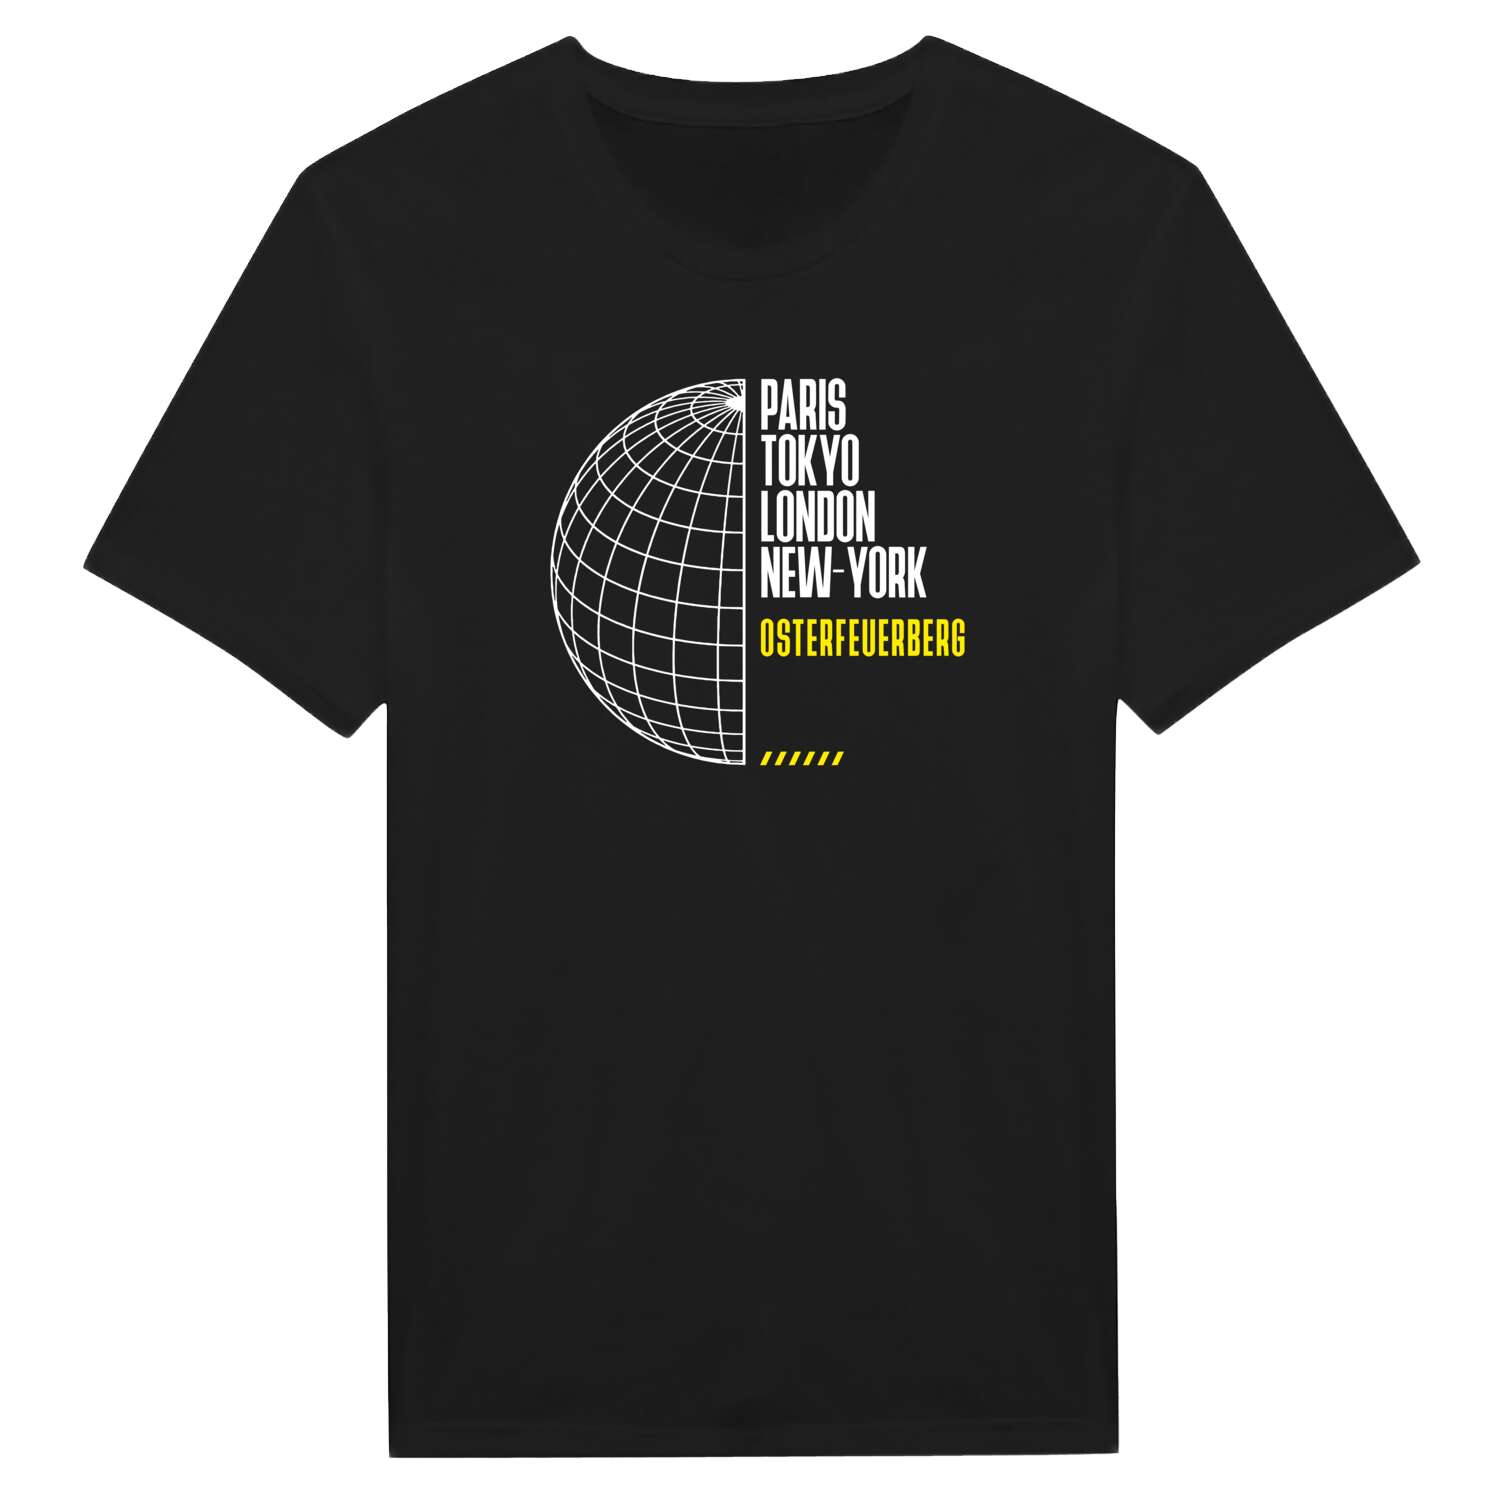 Osterfeuerberg T-Shirt »Paris Tokyo London«